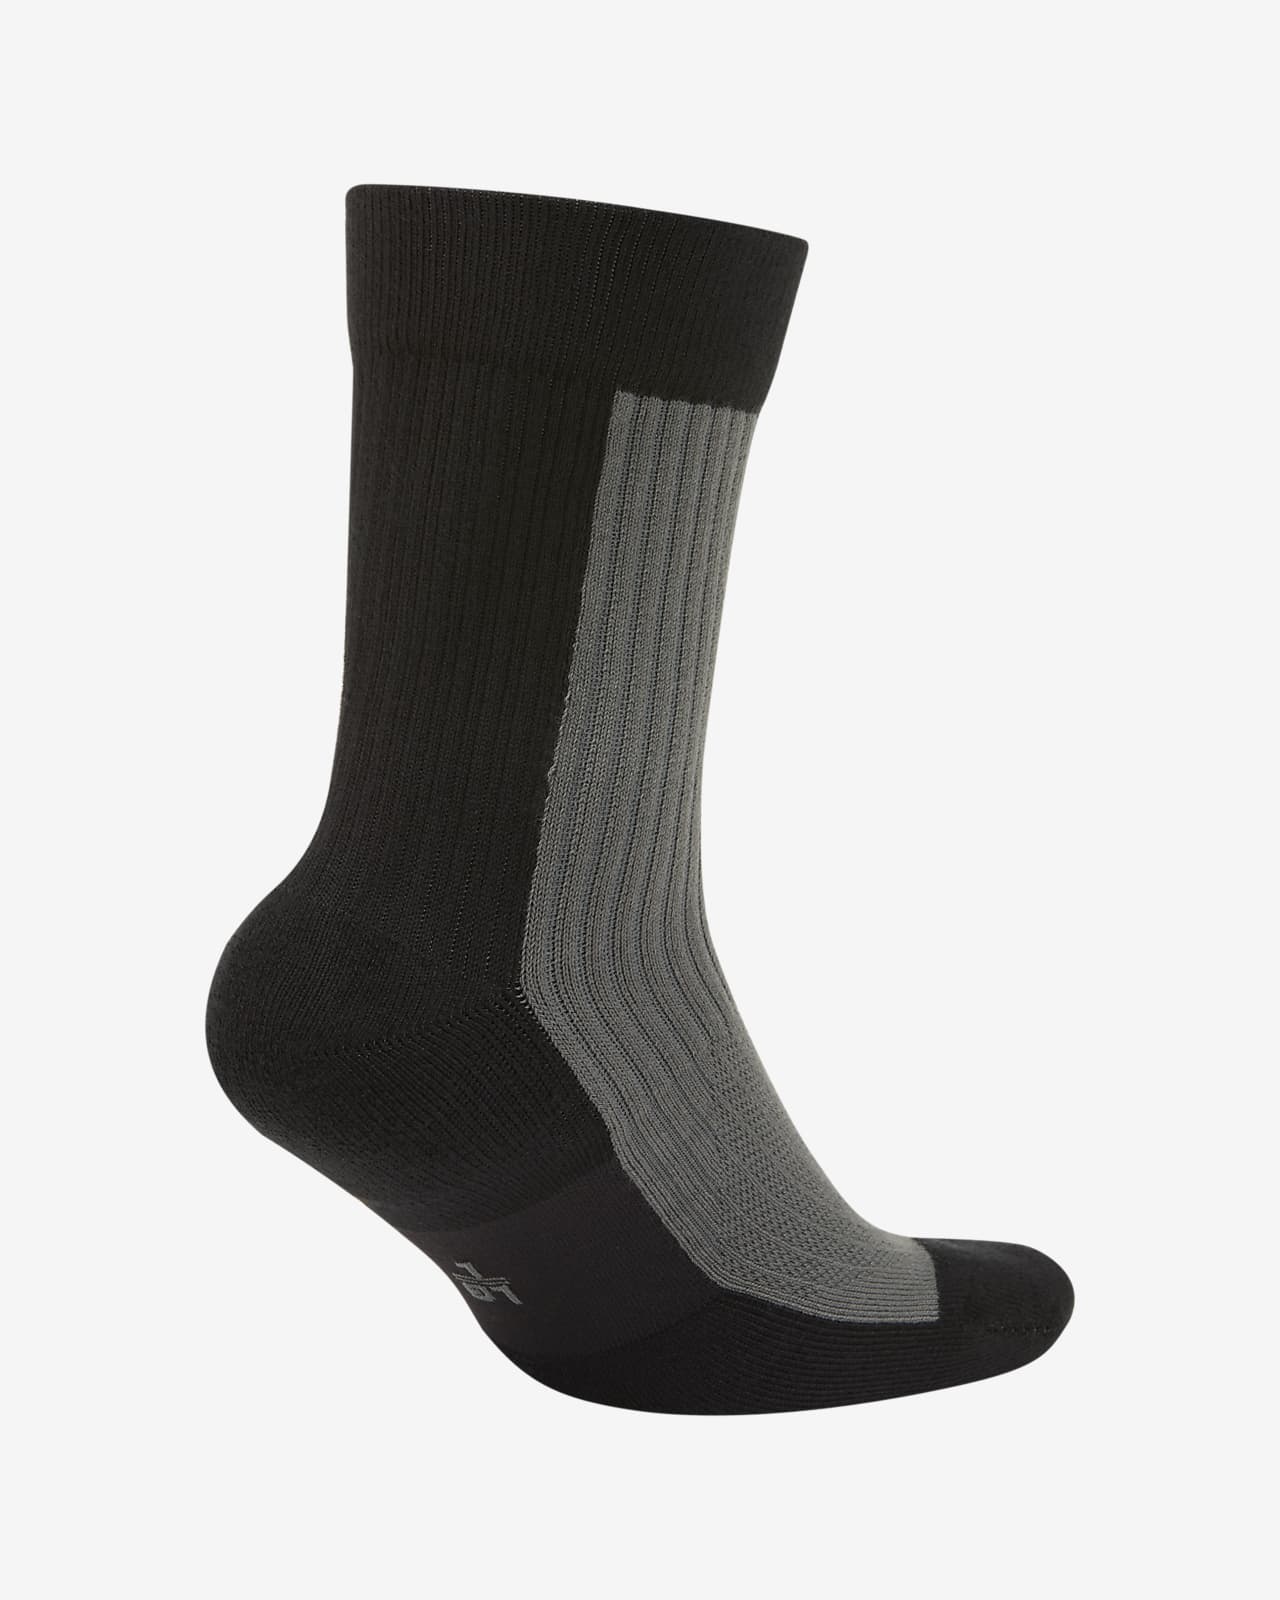 air max socks